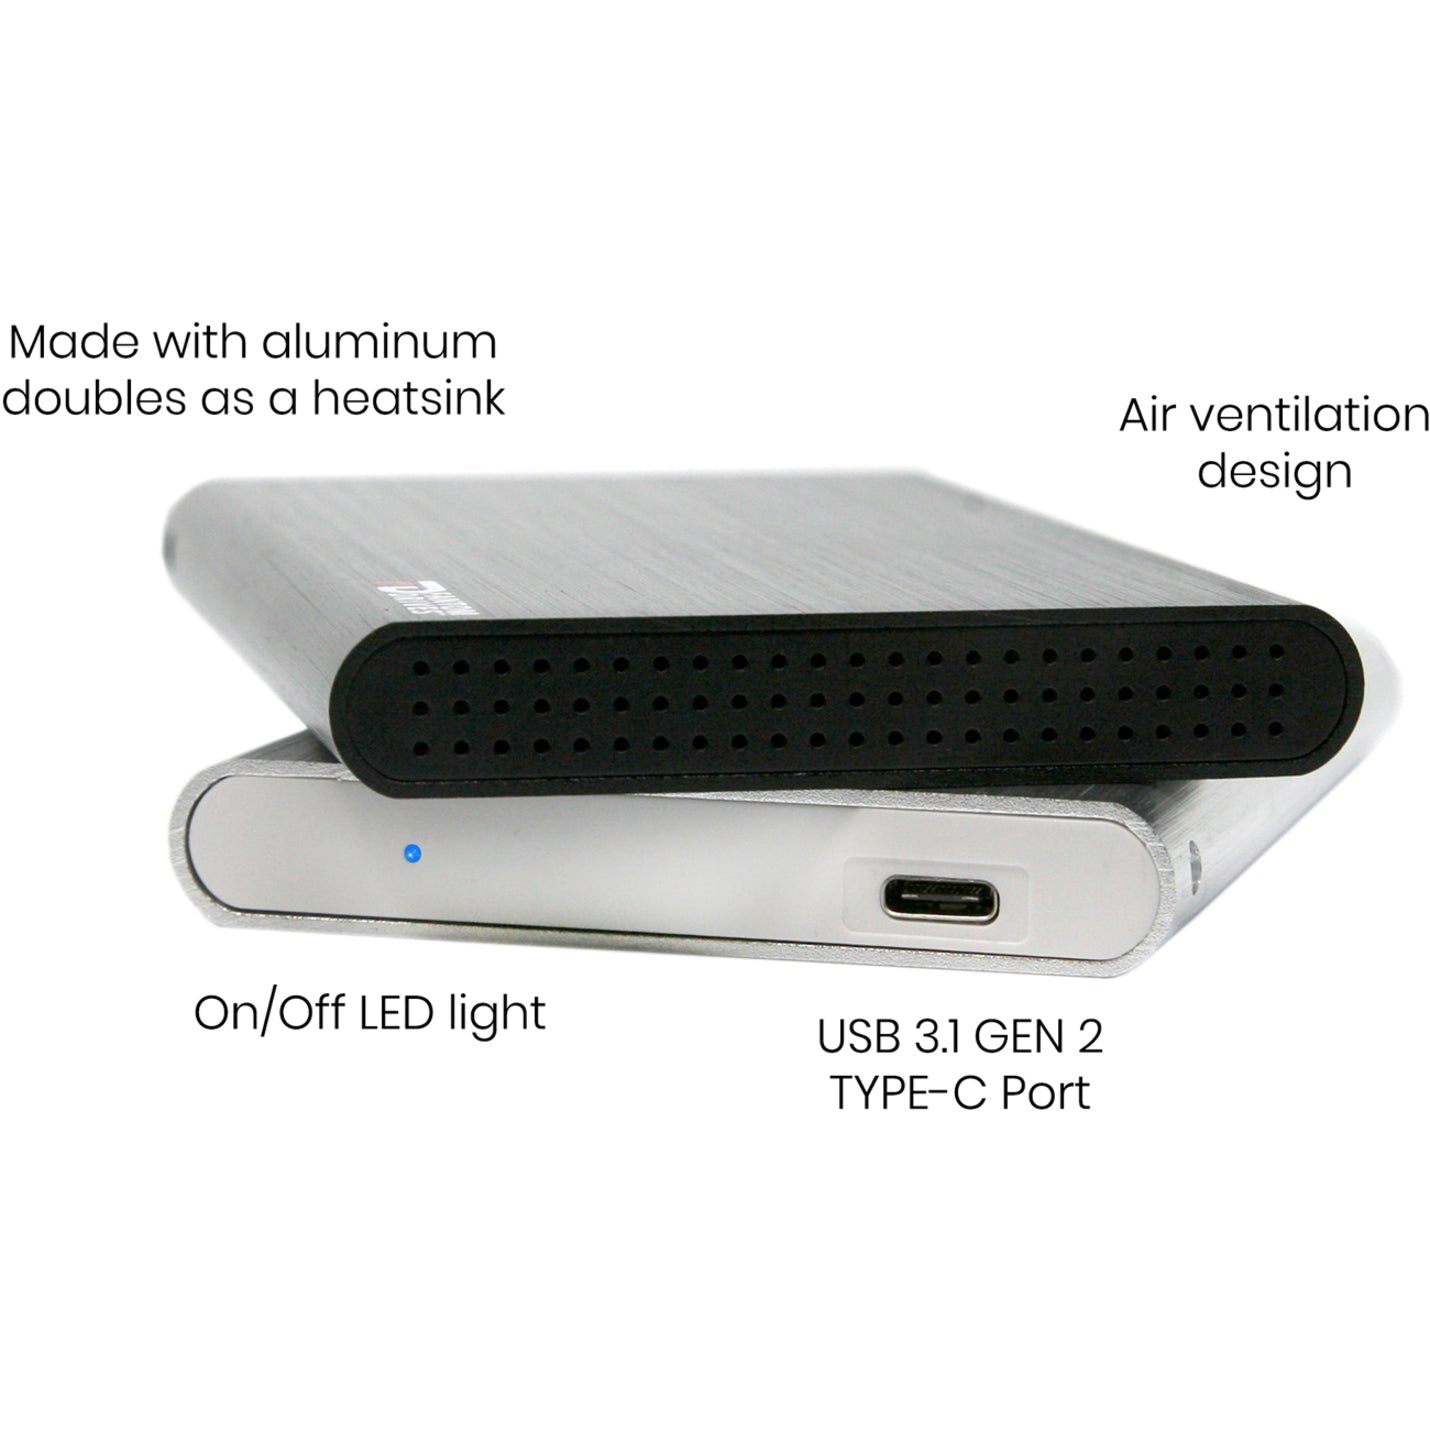 Fantom Drives 500GB Portable SSD - G31 - USB 3.2 Type-C 560MB/s Plug & Play for Mac Aluminum Silver CSD500S-M